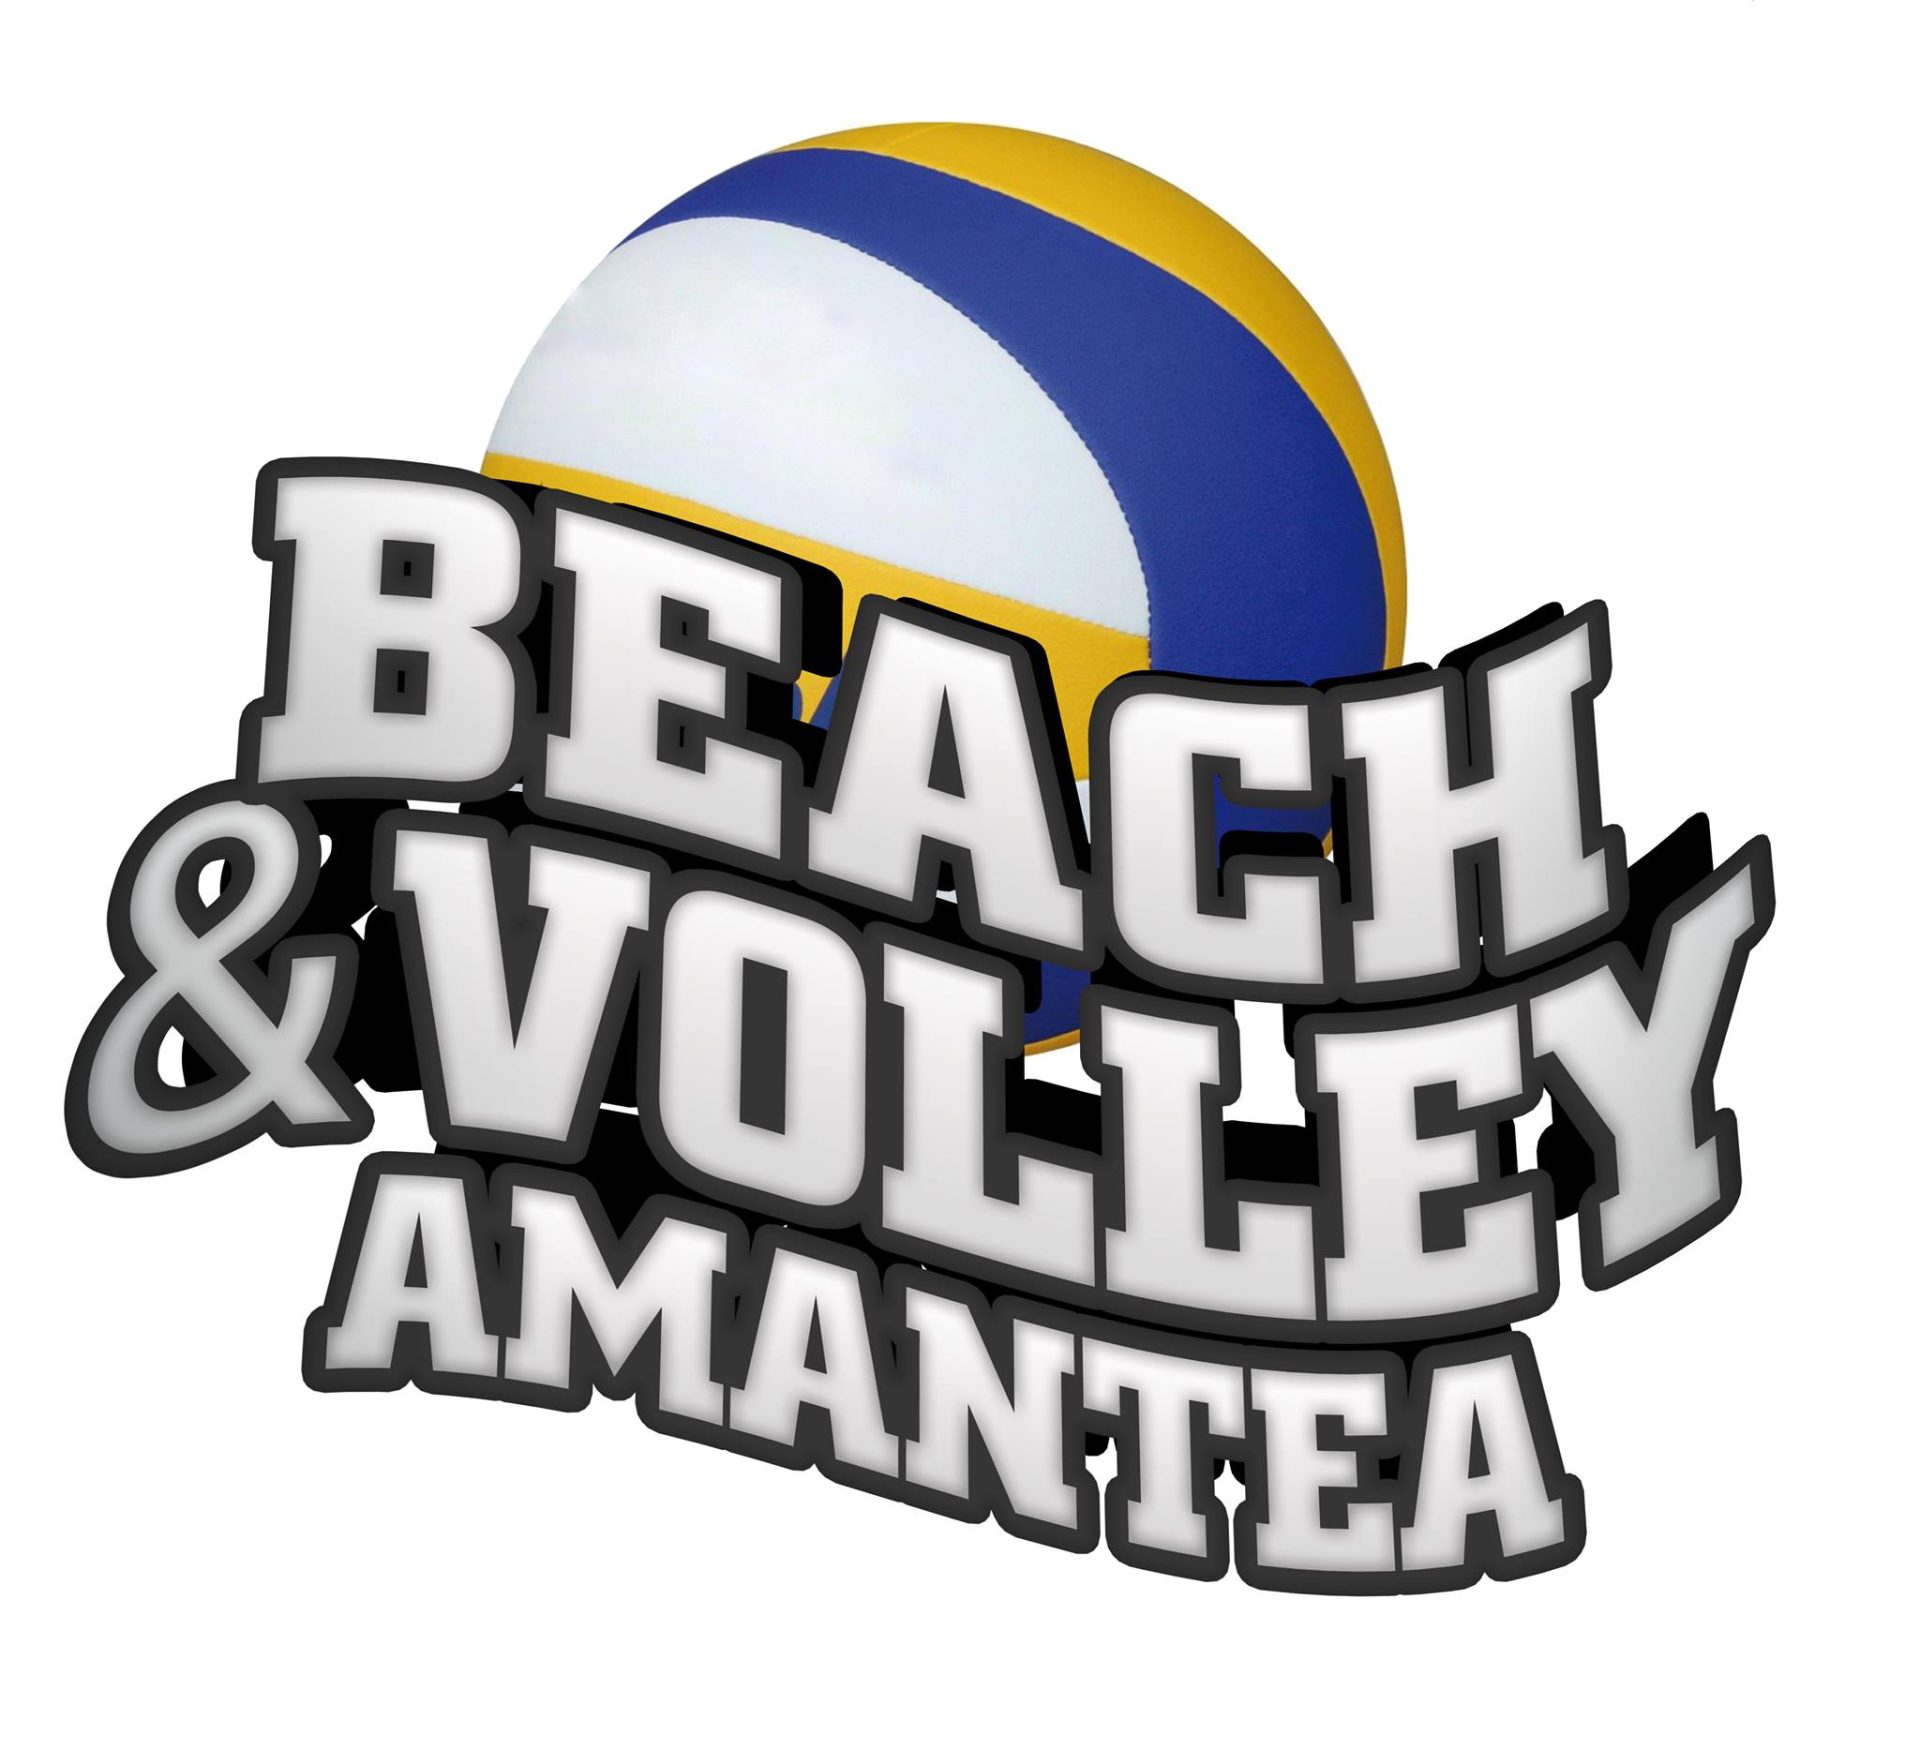 Beach & Volley Amantea